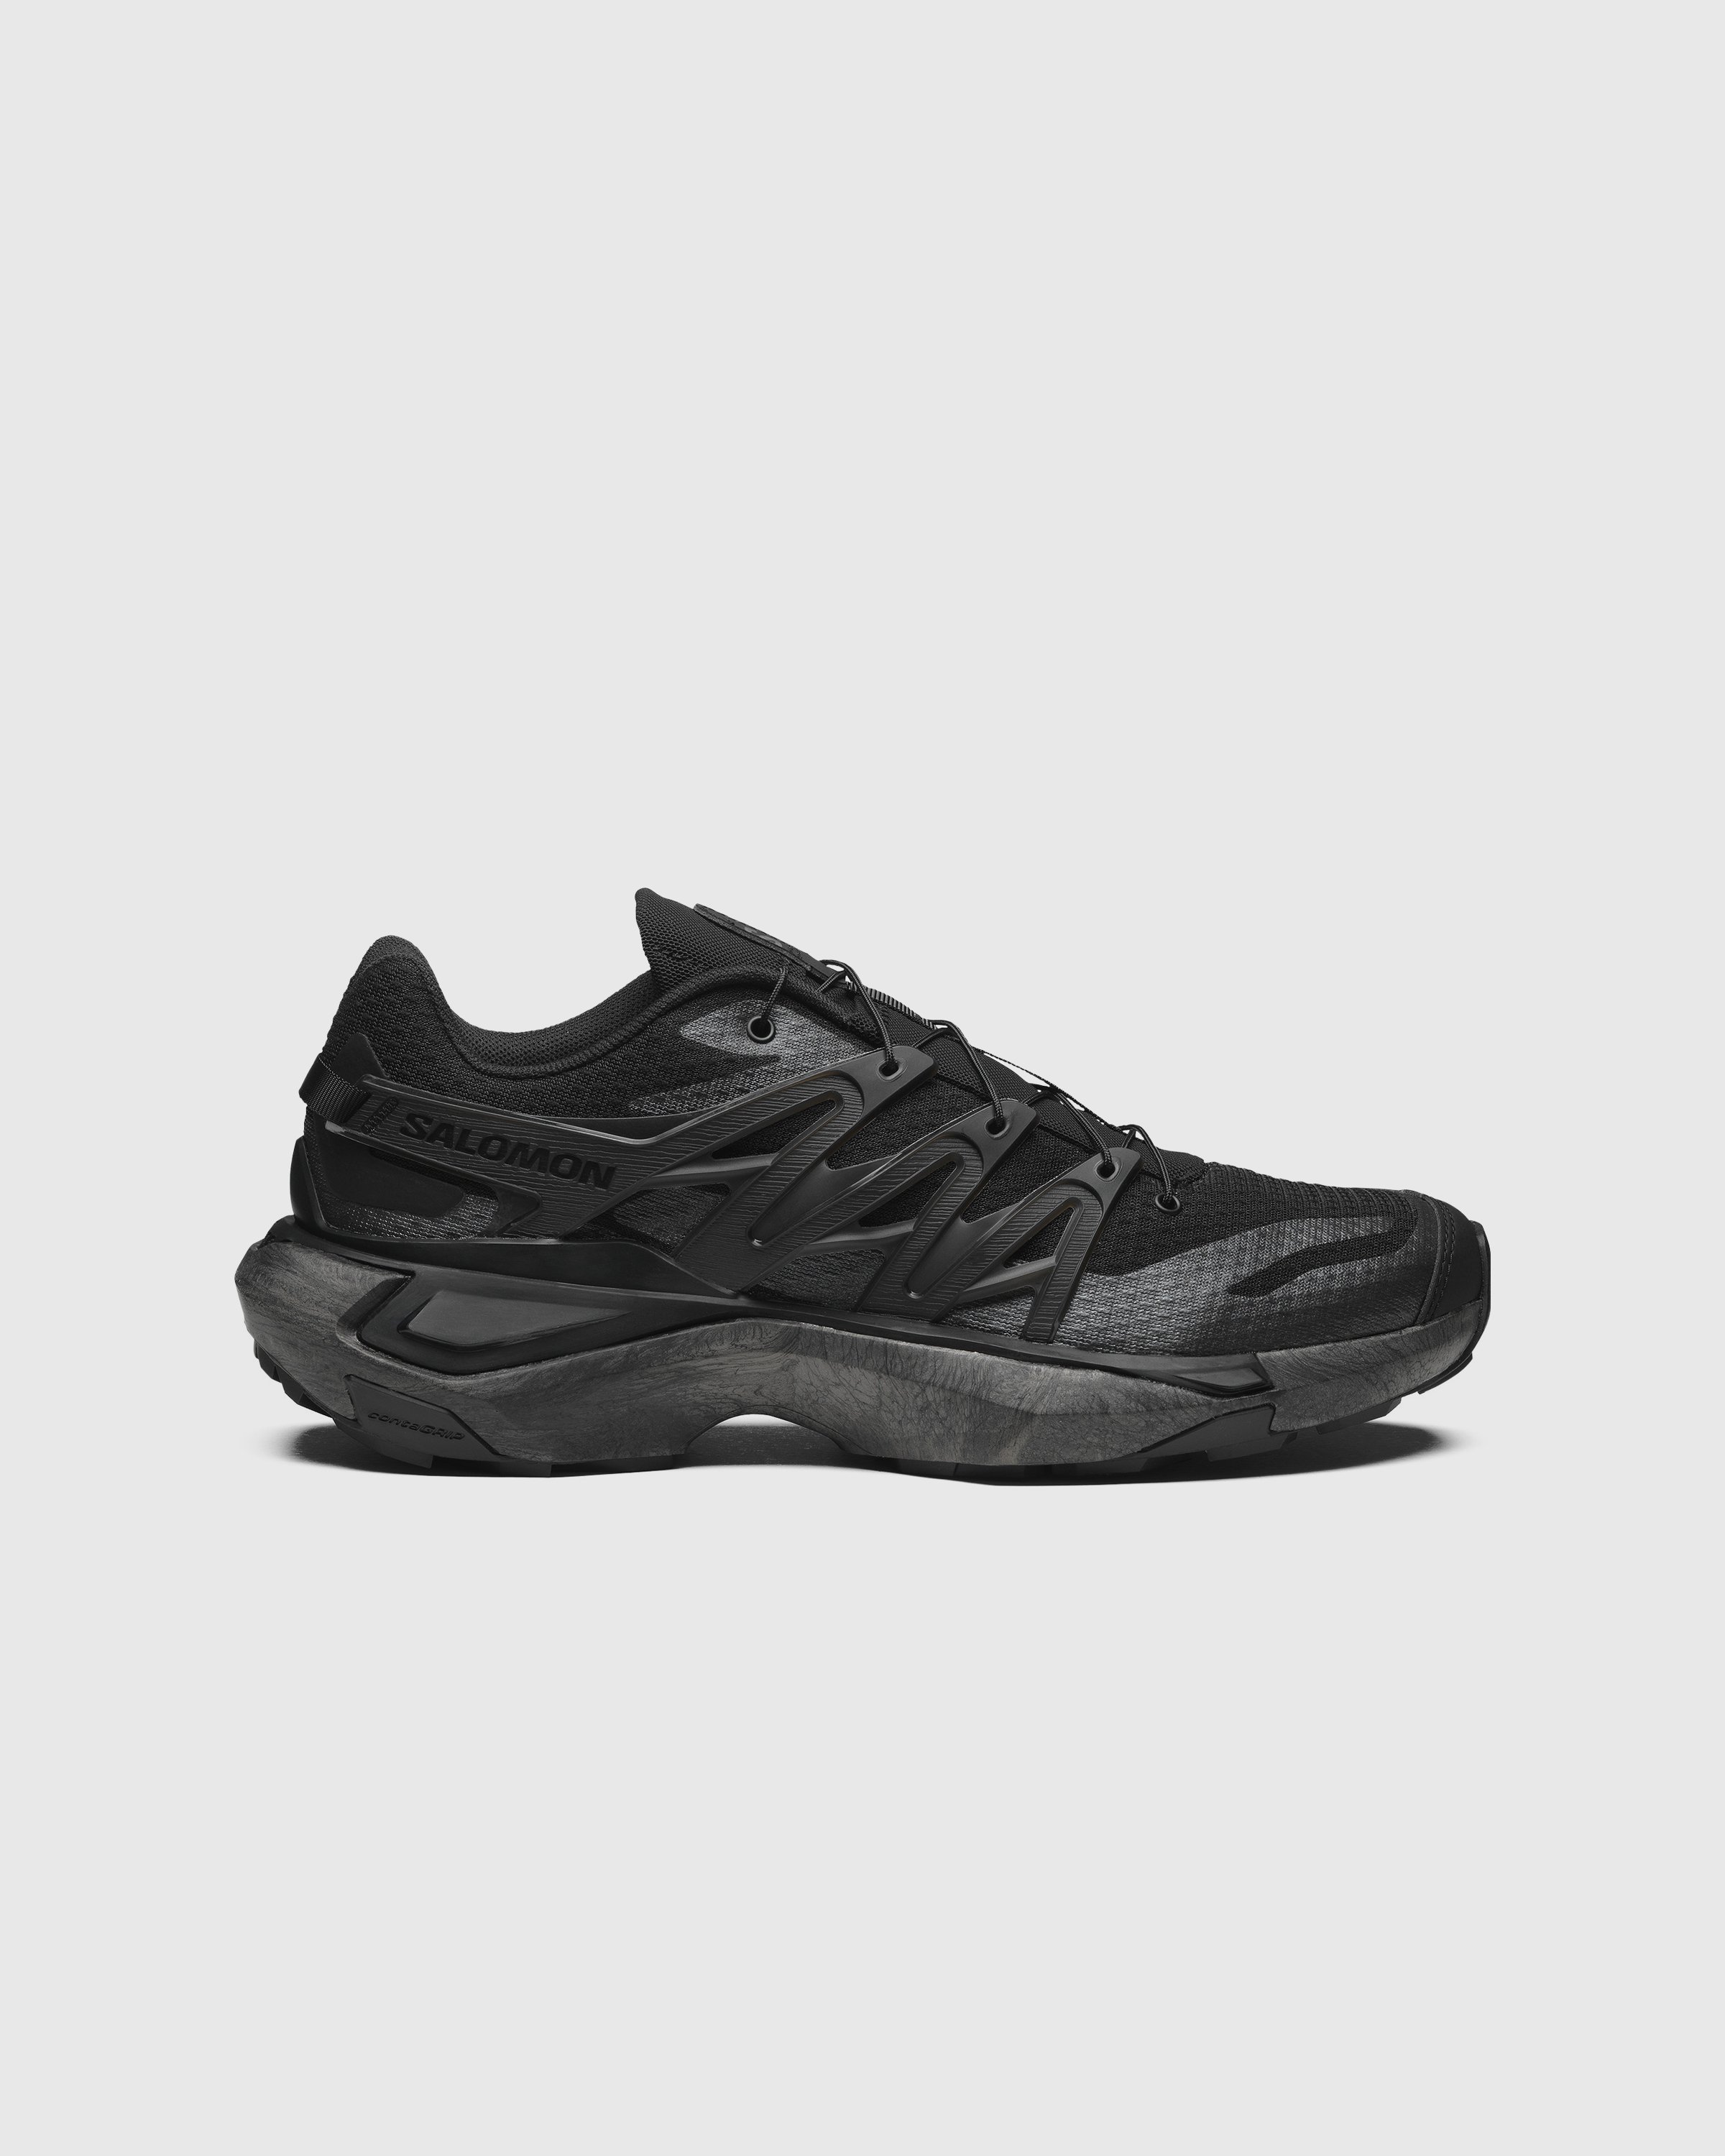 Salomon - XT PU.RE ADVANCED Black/Black/Pha - Footwear - Black - Image 1